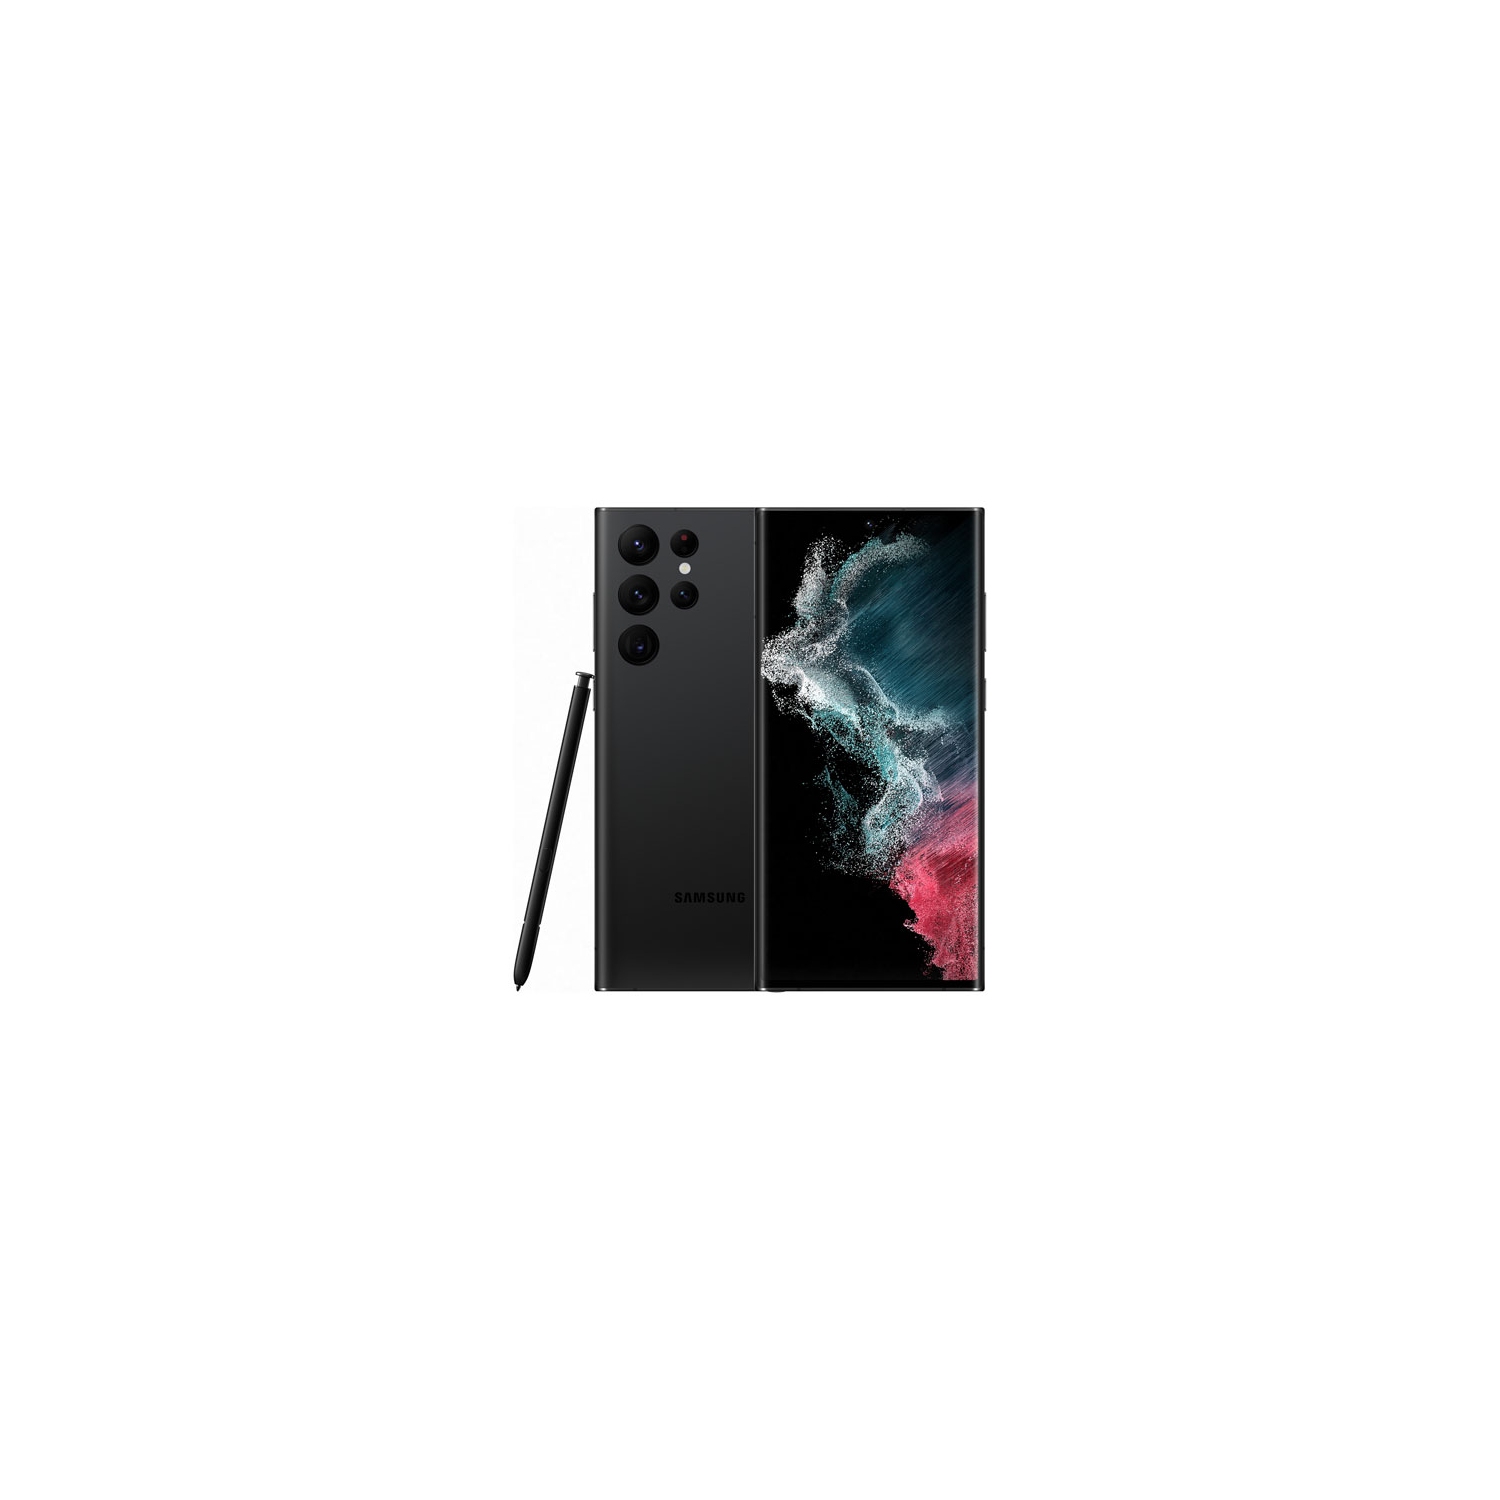 Samsung Galaxy S22 Ultra 5g - 128GB - Unlocked - Open Box Like new